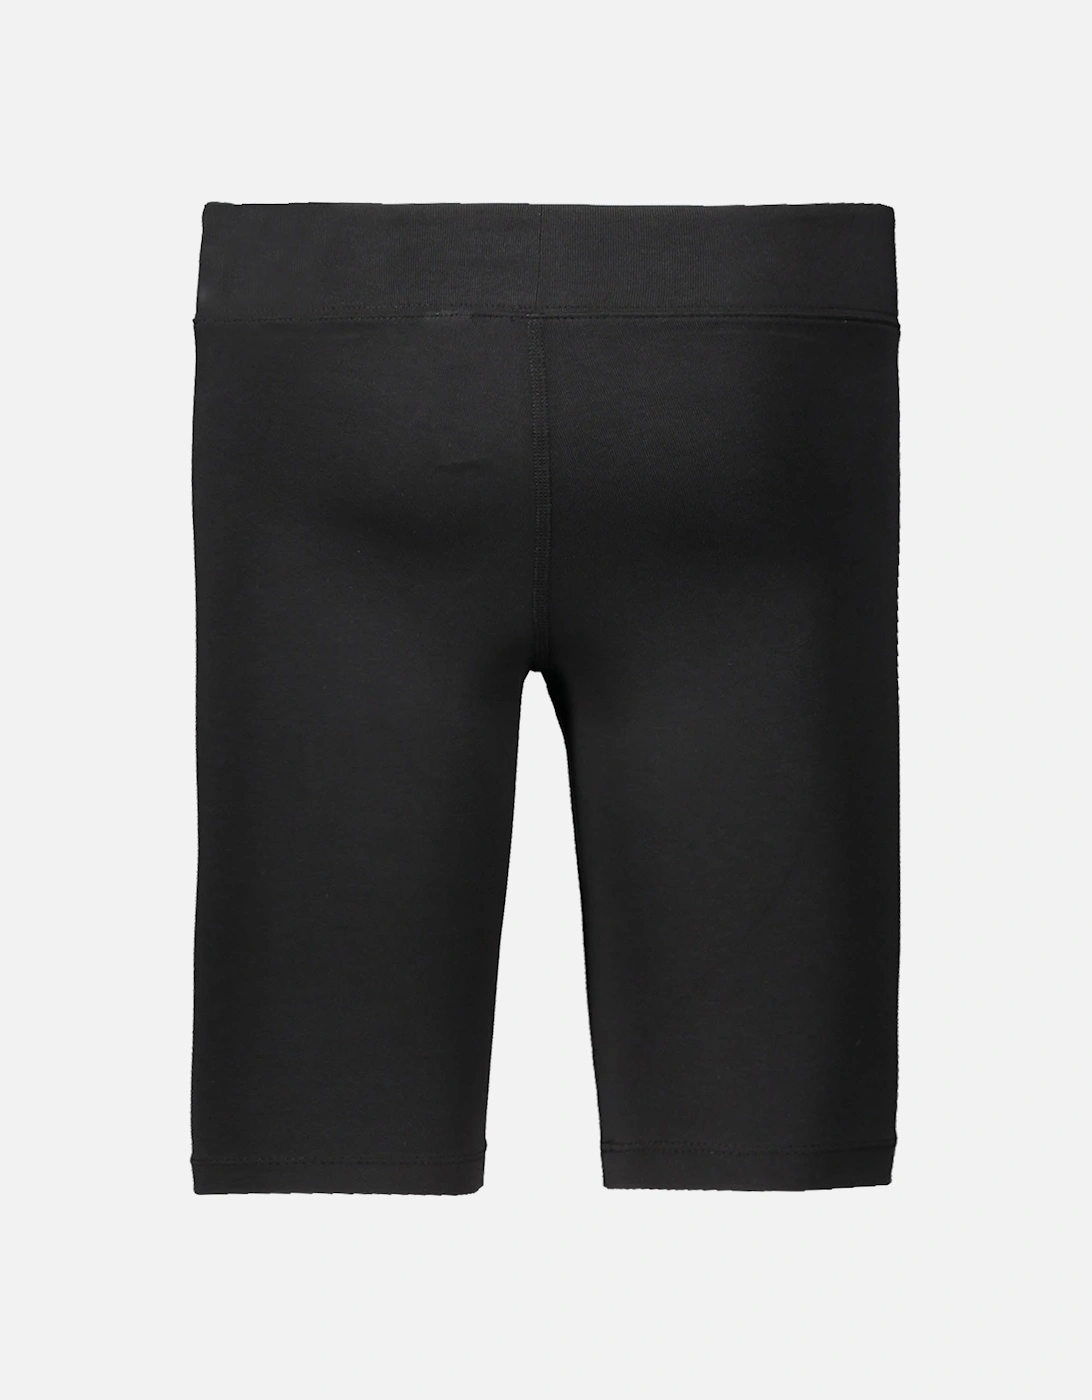 NSW Bike Shorts - Black